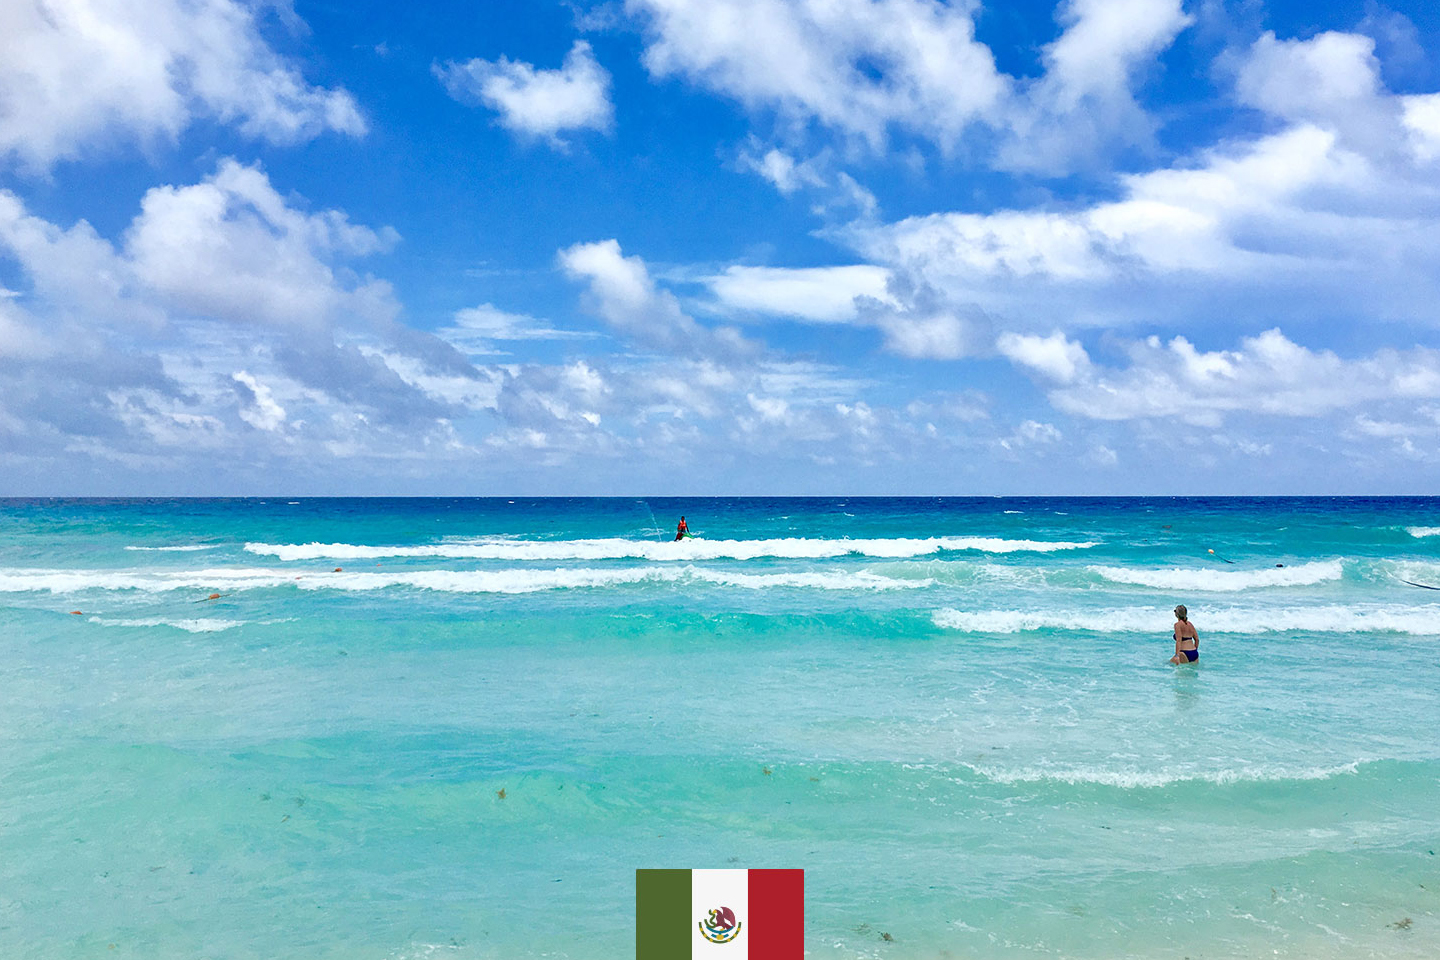 Playa Ballenas, Cancún: lo que deberías saber antes de ir